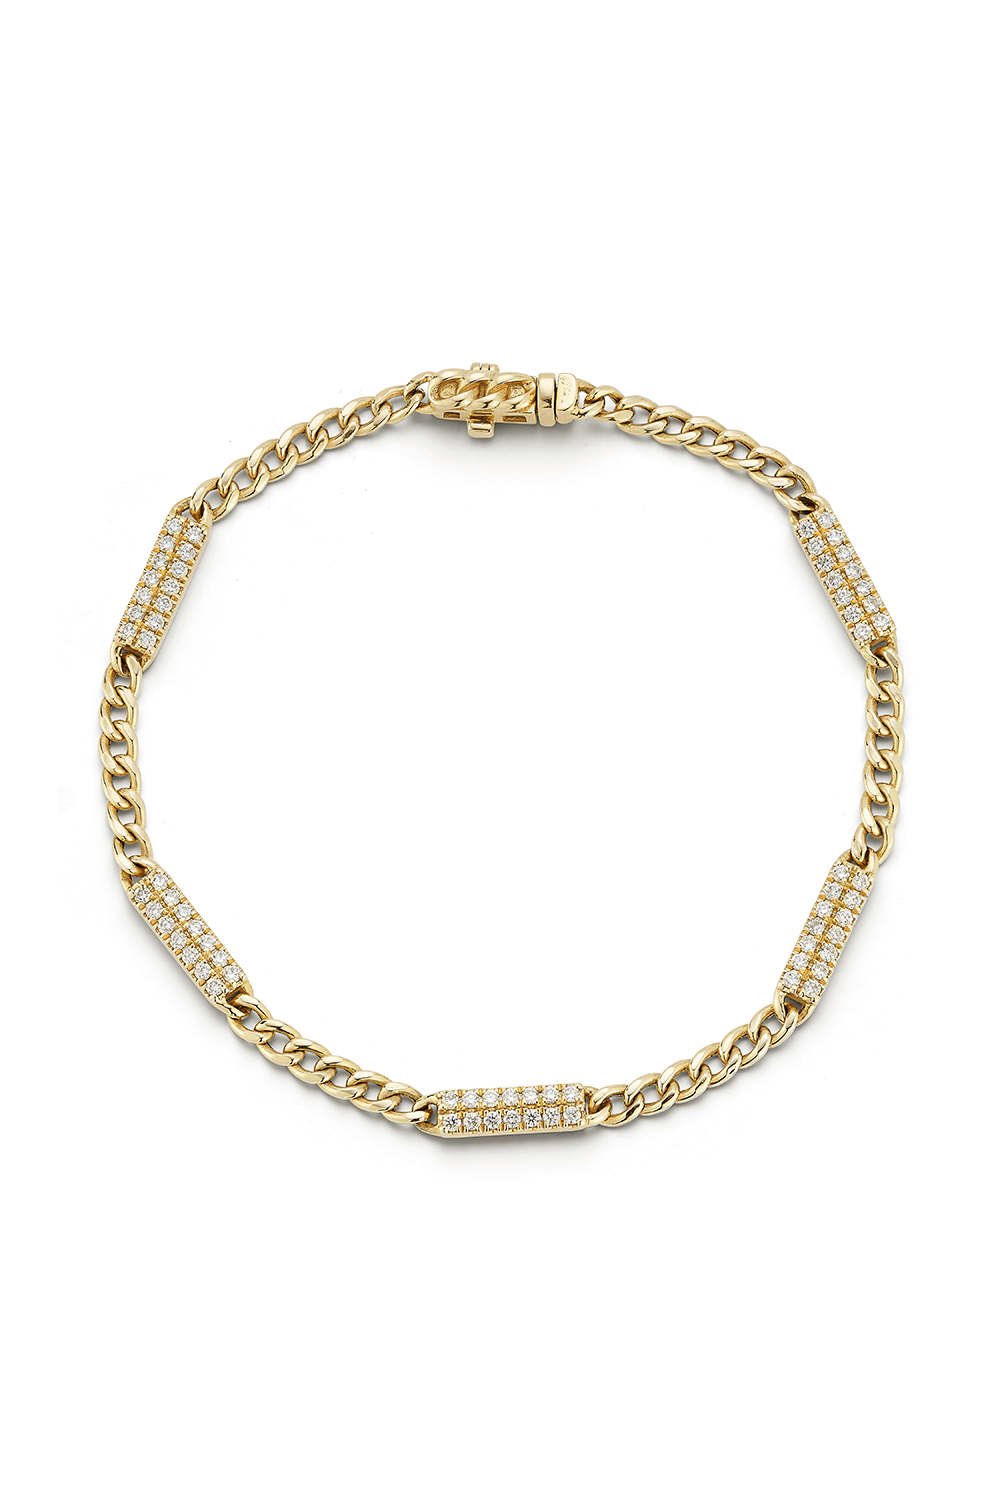 DANA REBECCA DESIGNS-Sylvie Rose Cuban Chain Bar Bracelet-YELLOW GOLD